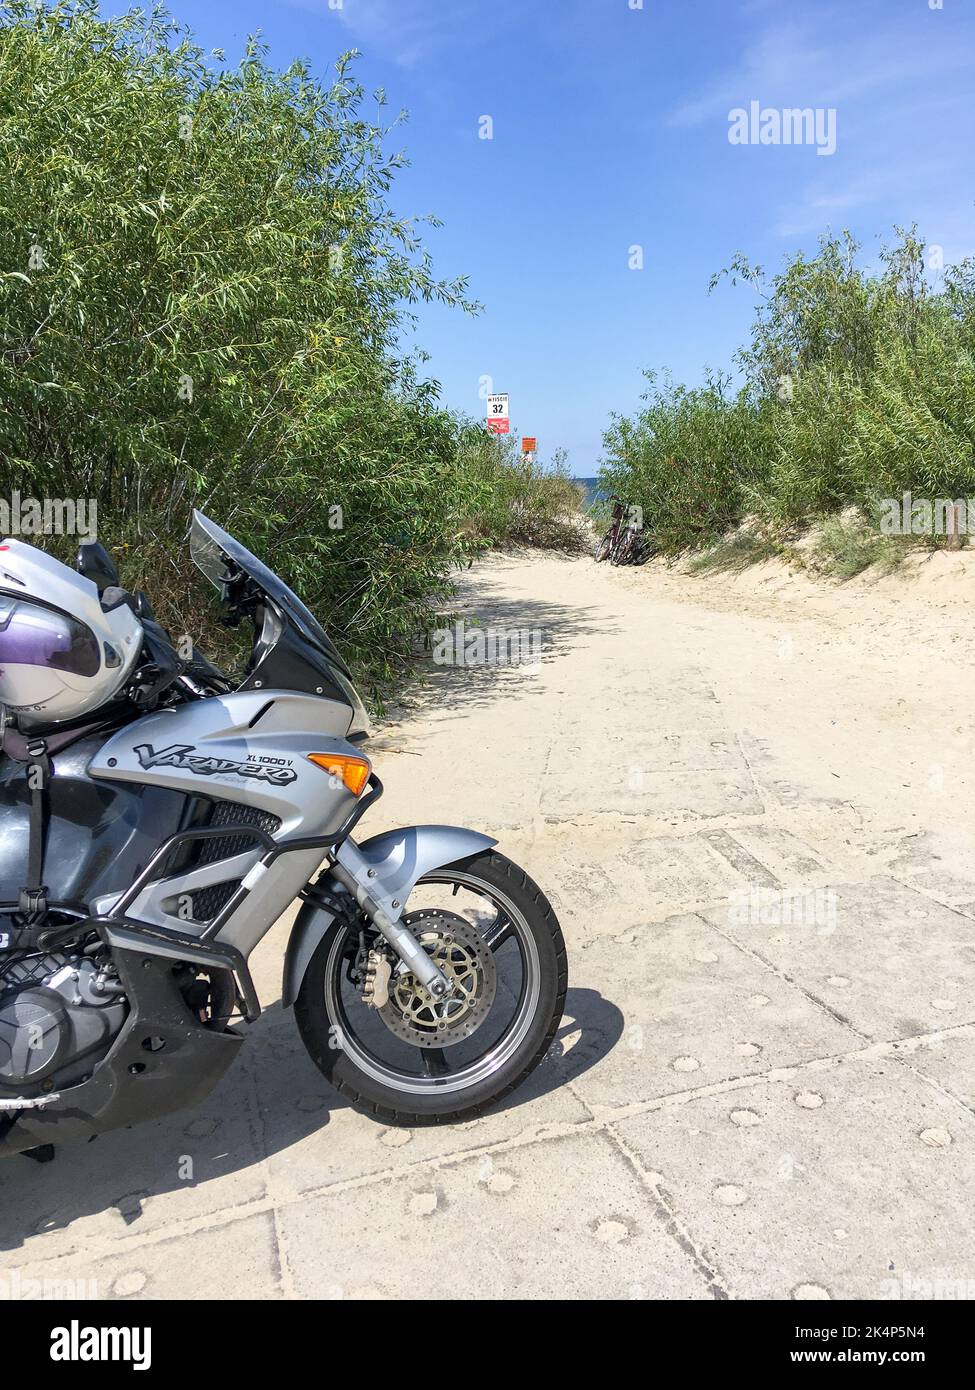 Polen: Motorrad in der Nähe des Strandes geparkt Stockfotografie - Alamy